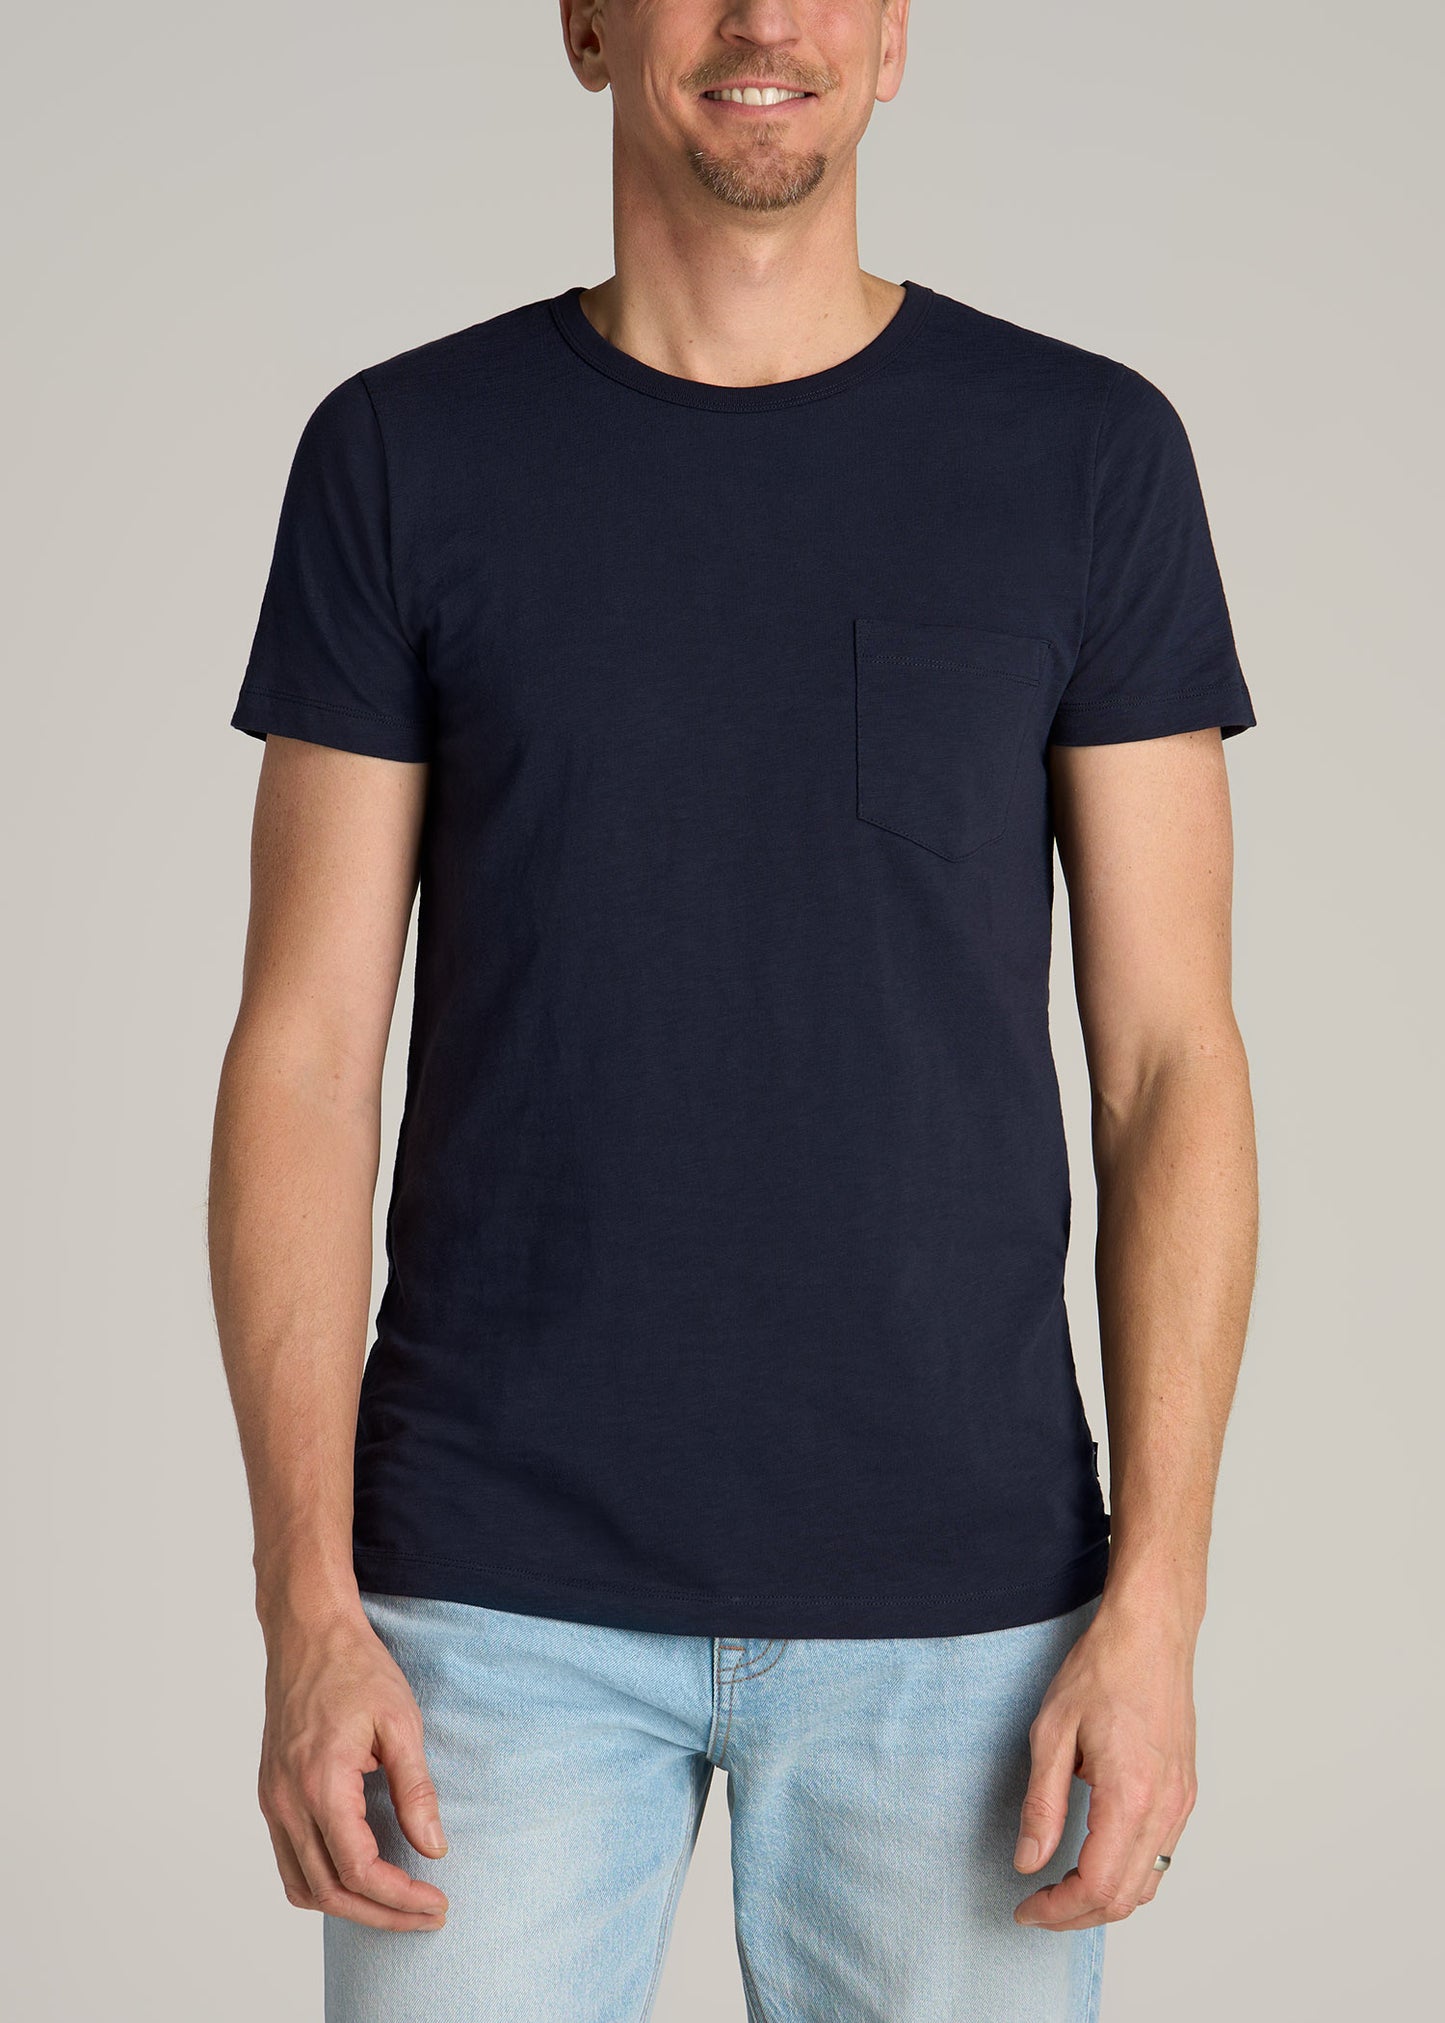 Sunwashed Slub Pocket T-Shirt for Tall Men | American Tall